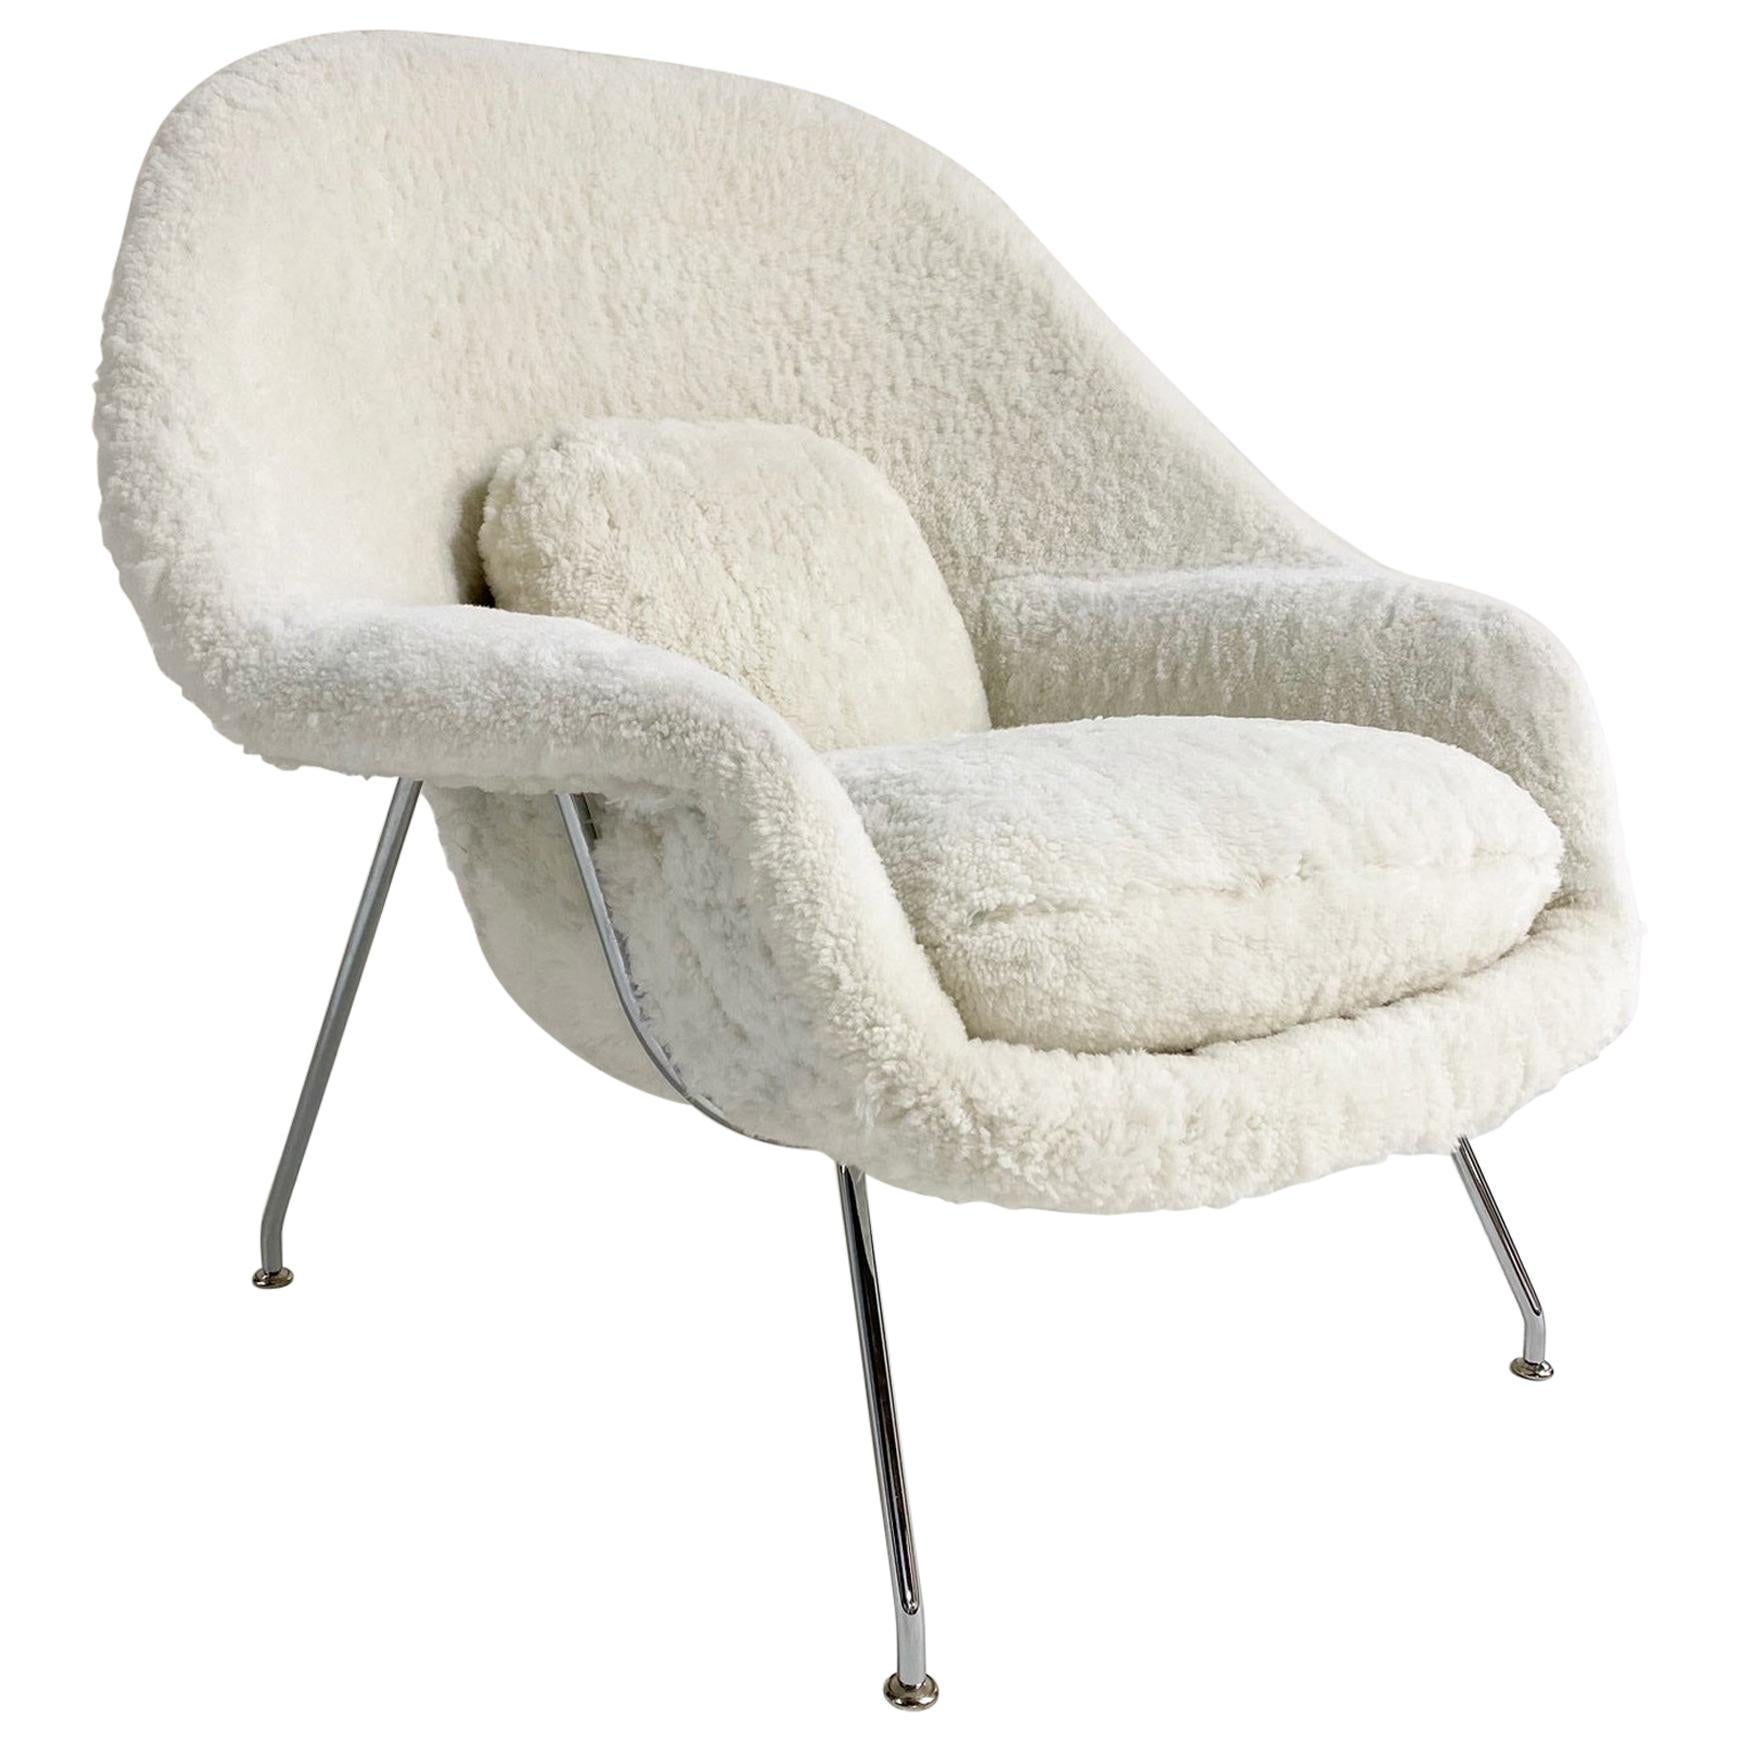 Forsyth Bespoke Eero Saarinen Womb Chair in Australian Sheepskin